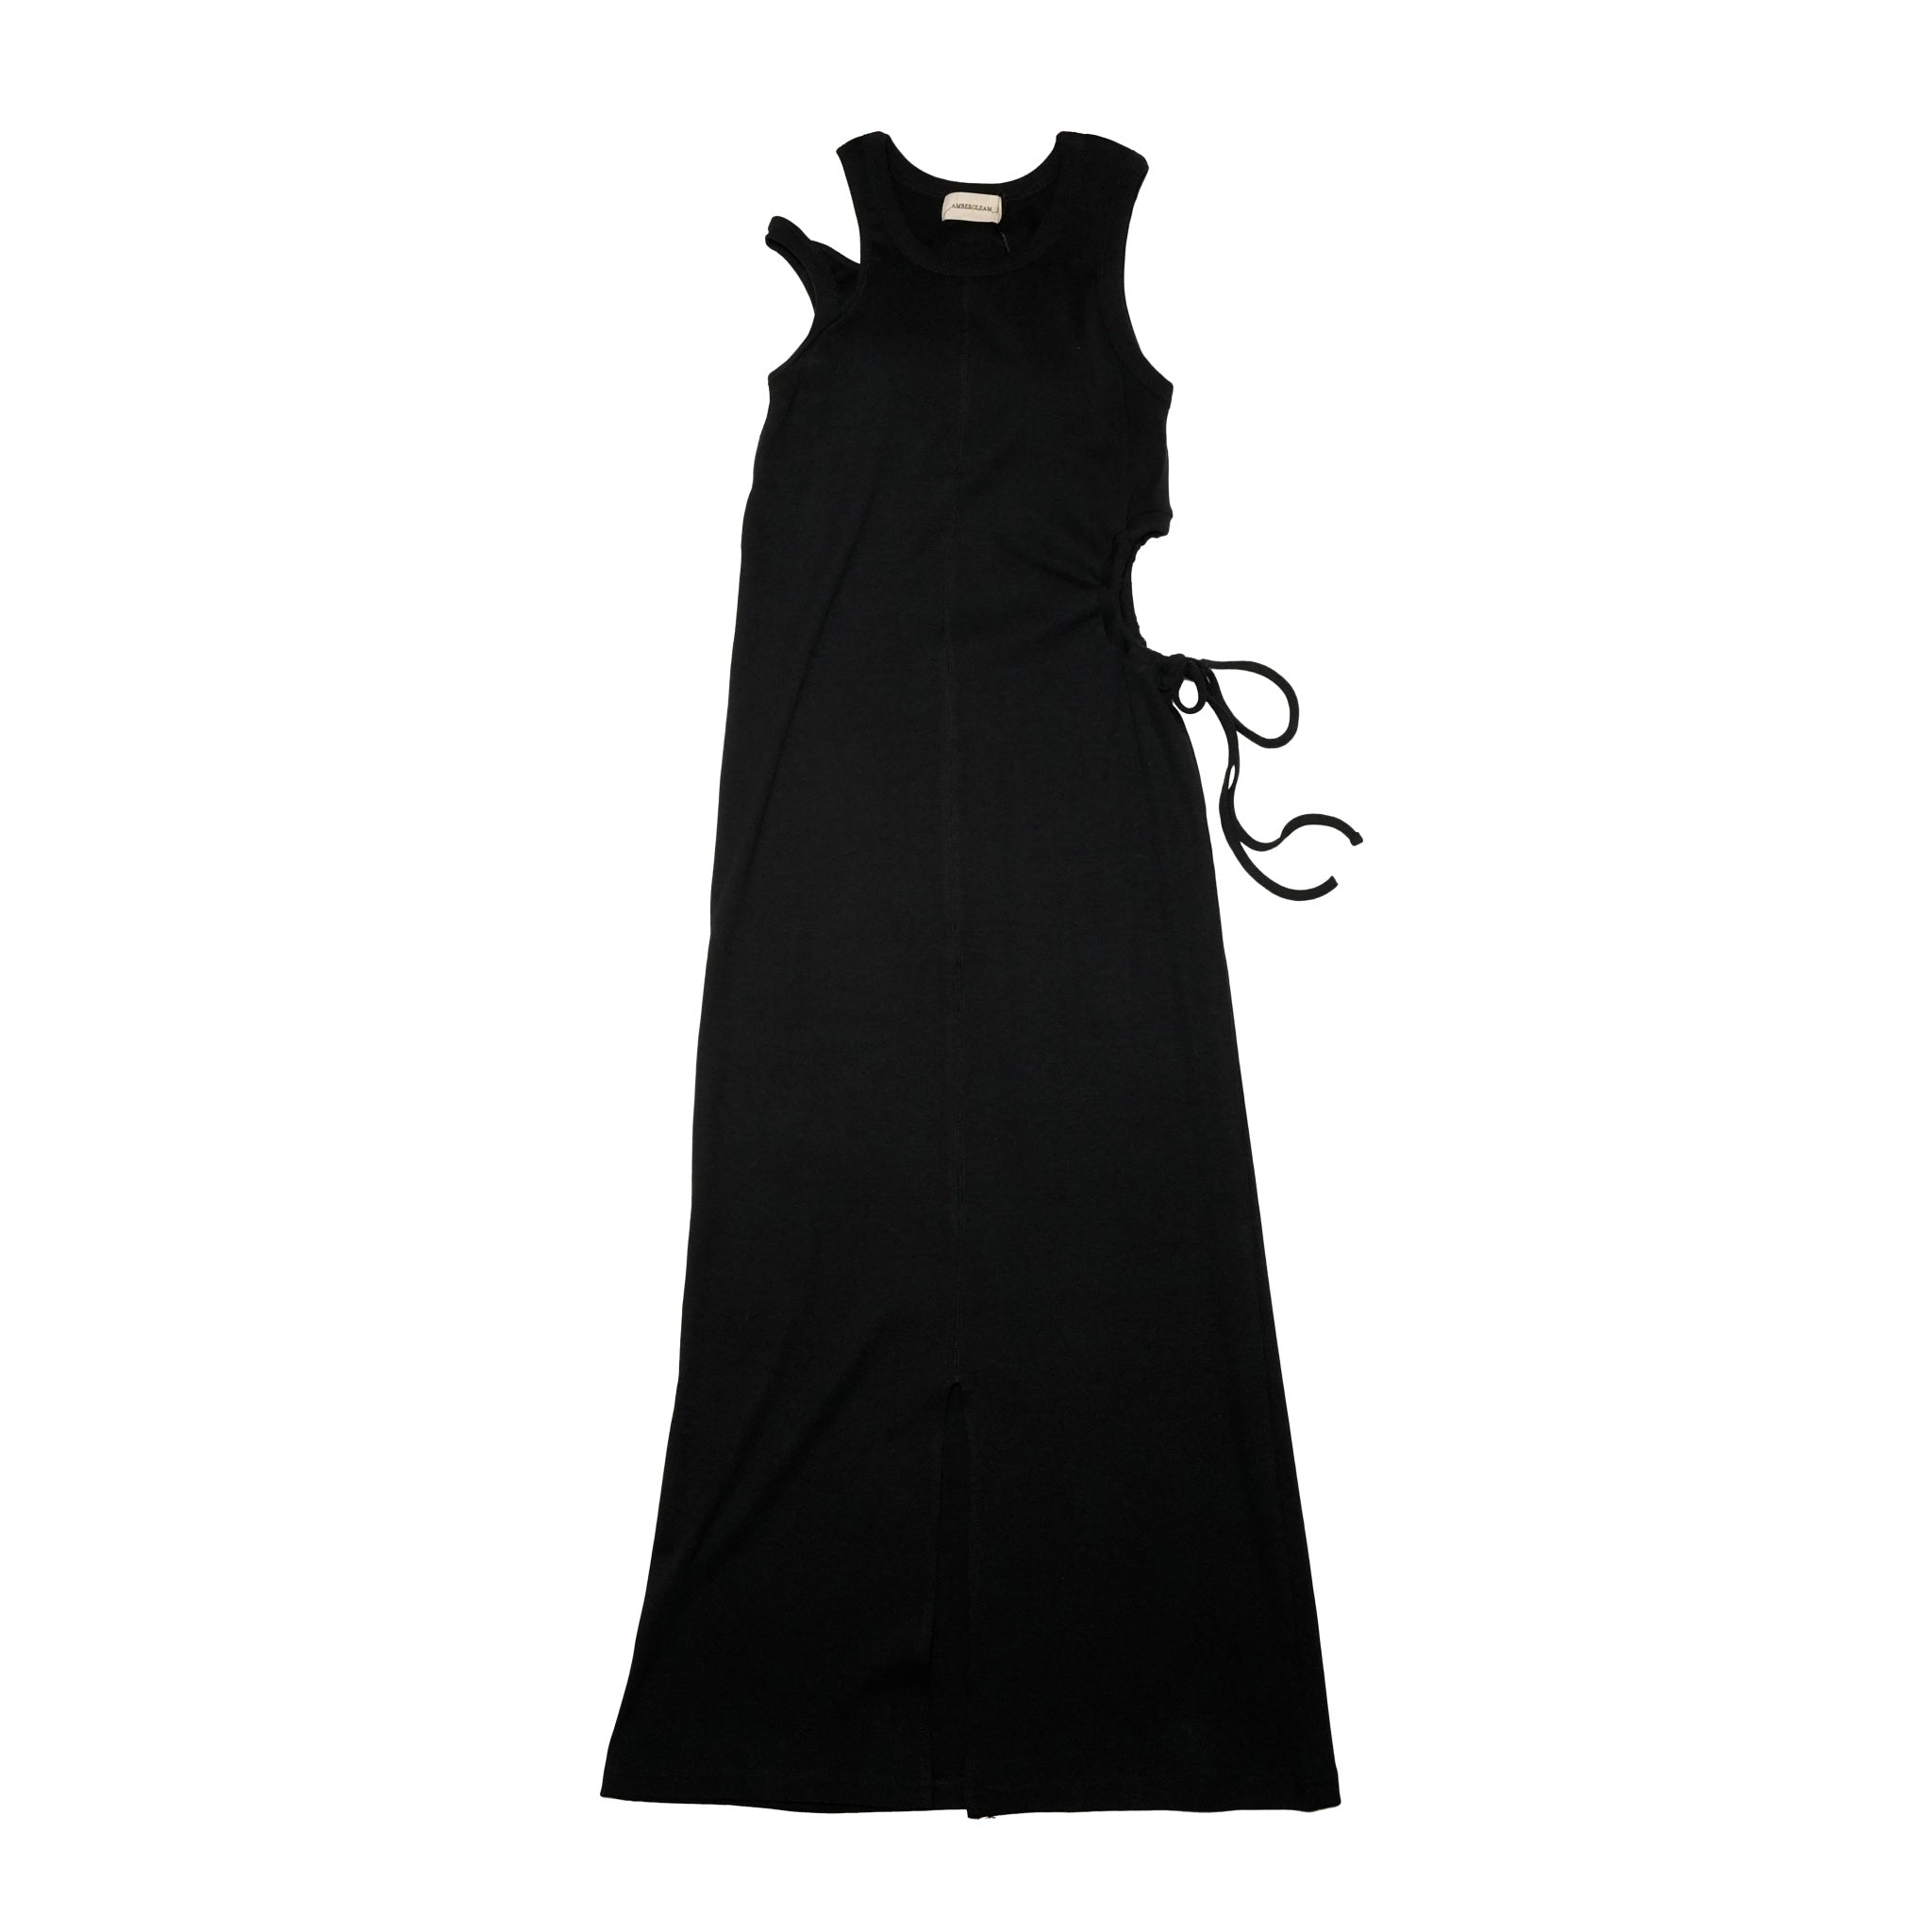 Name:Stretch RIB Art Dress | Color:Black【AMBERGLEAM_アンバーグリーム】| No:1183141418